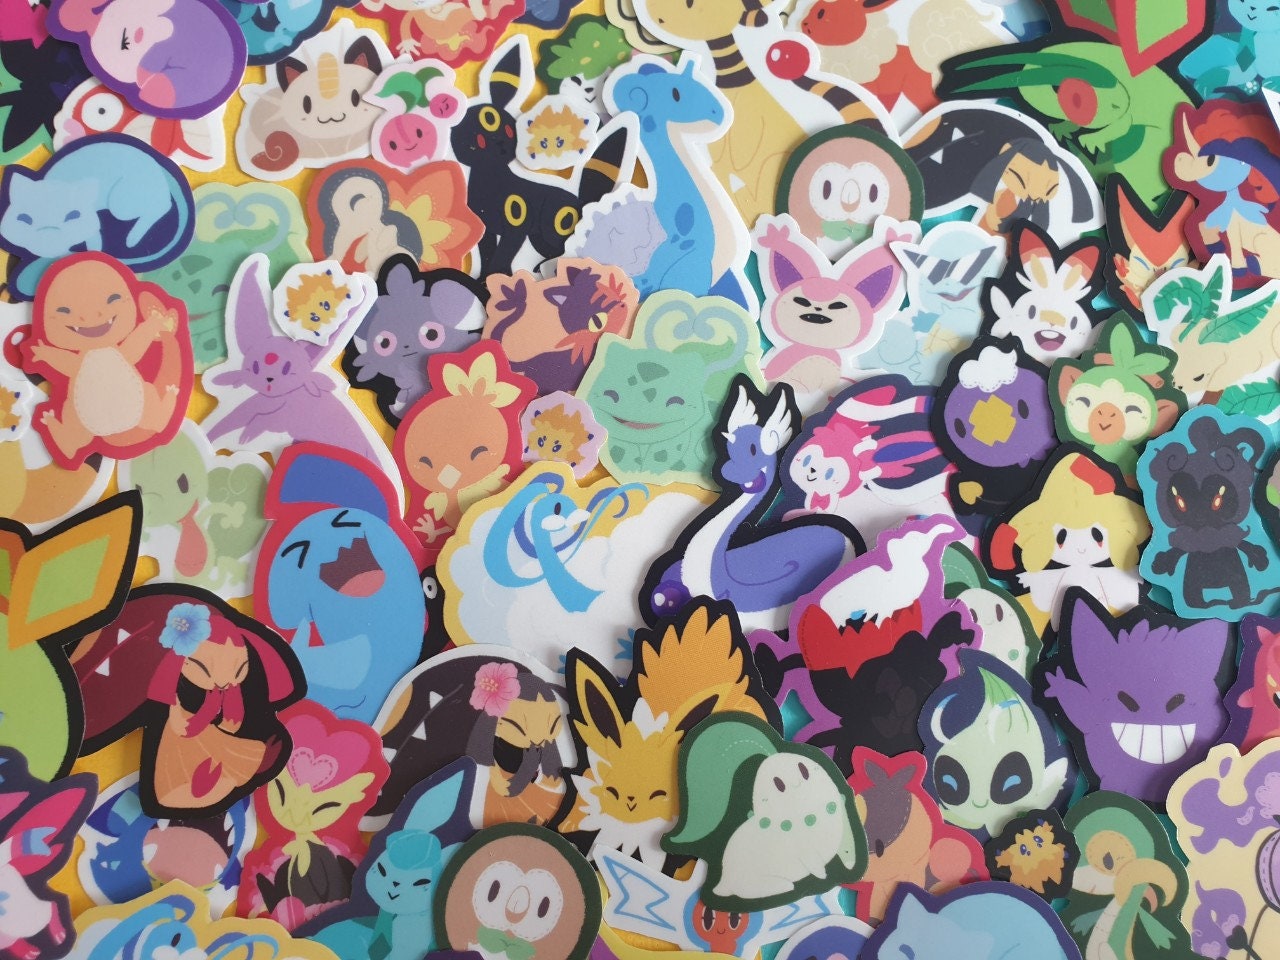 Pokemon Stickers for Sale  Pokemon stickers, Pokemon, Cute pokemon  wallpaper